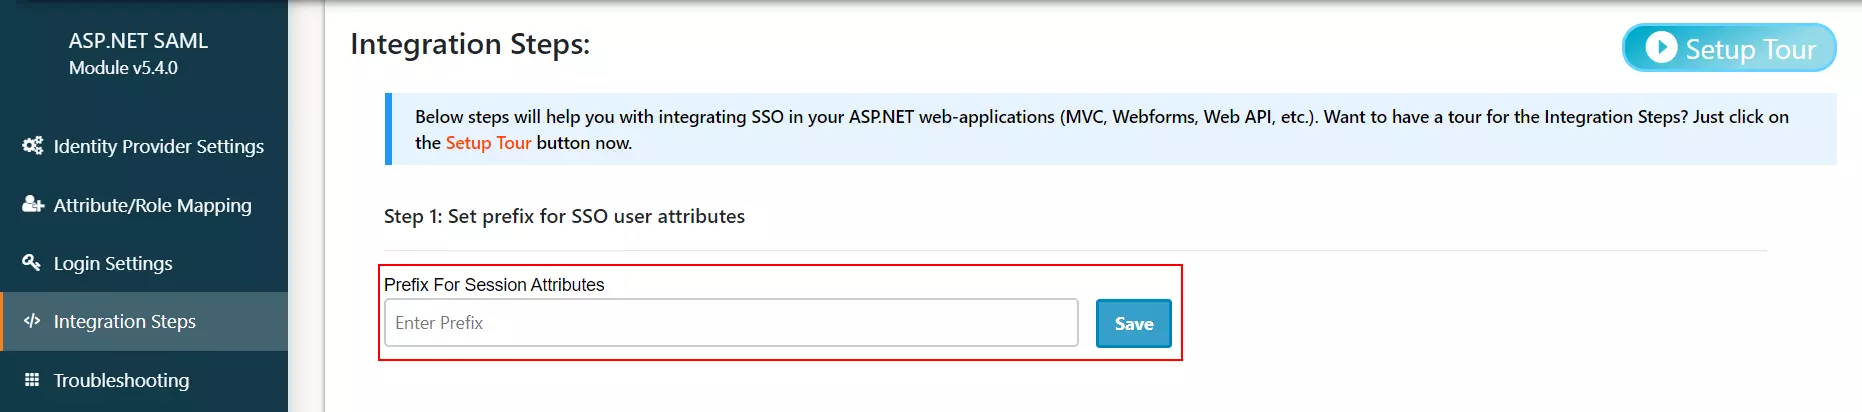 ASP.NET SAML Single Sign-On (SSO) using Office365 as IDP - Prefix SSO Attributes